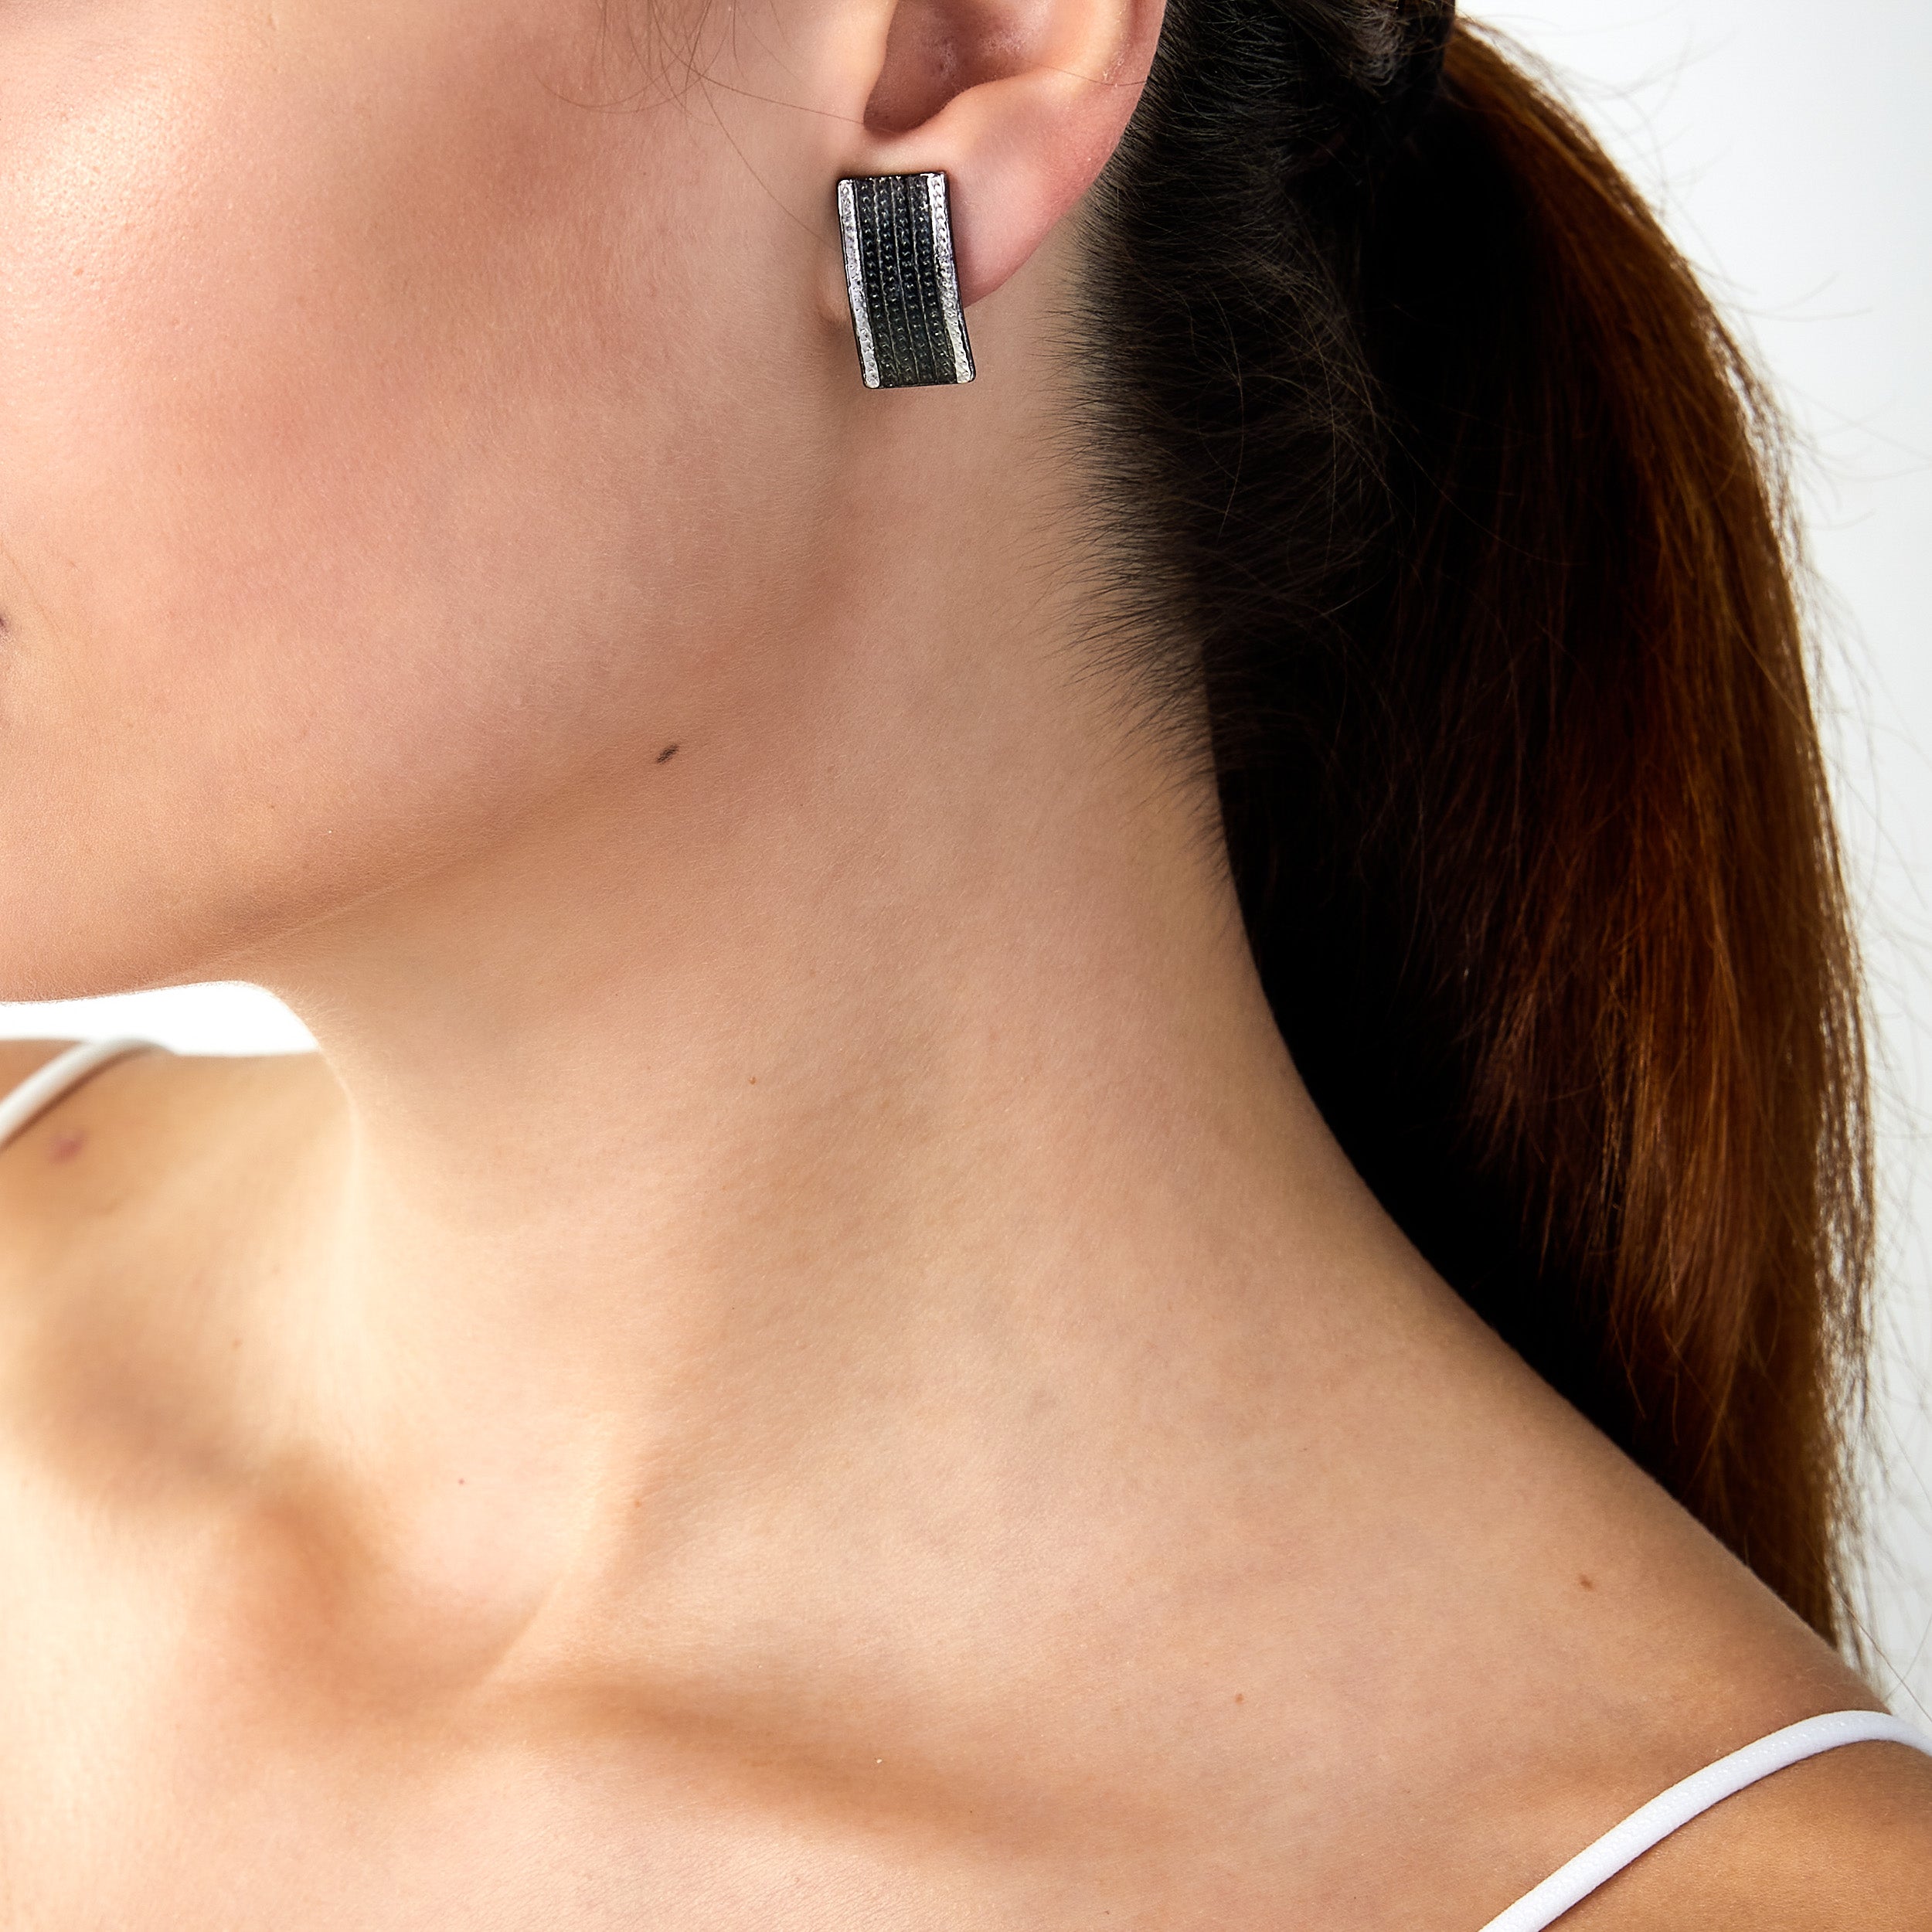 Vintage Trifari oxidised earrings worn on a woman’s ear